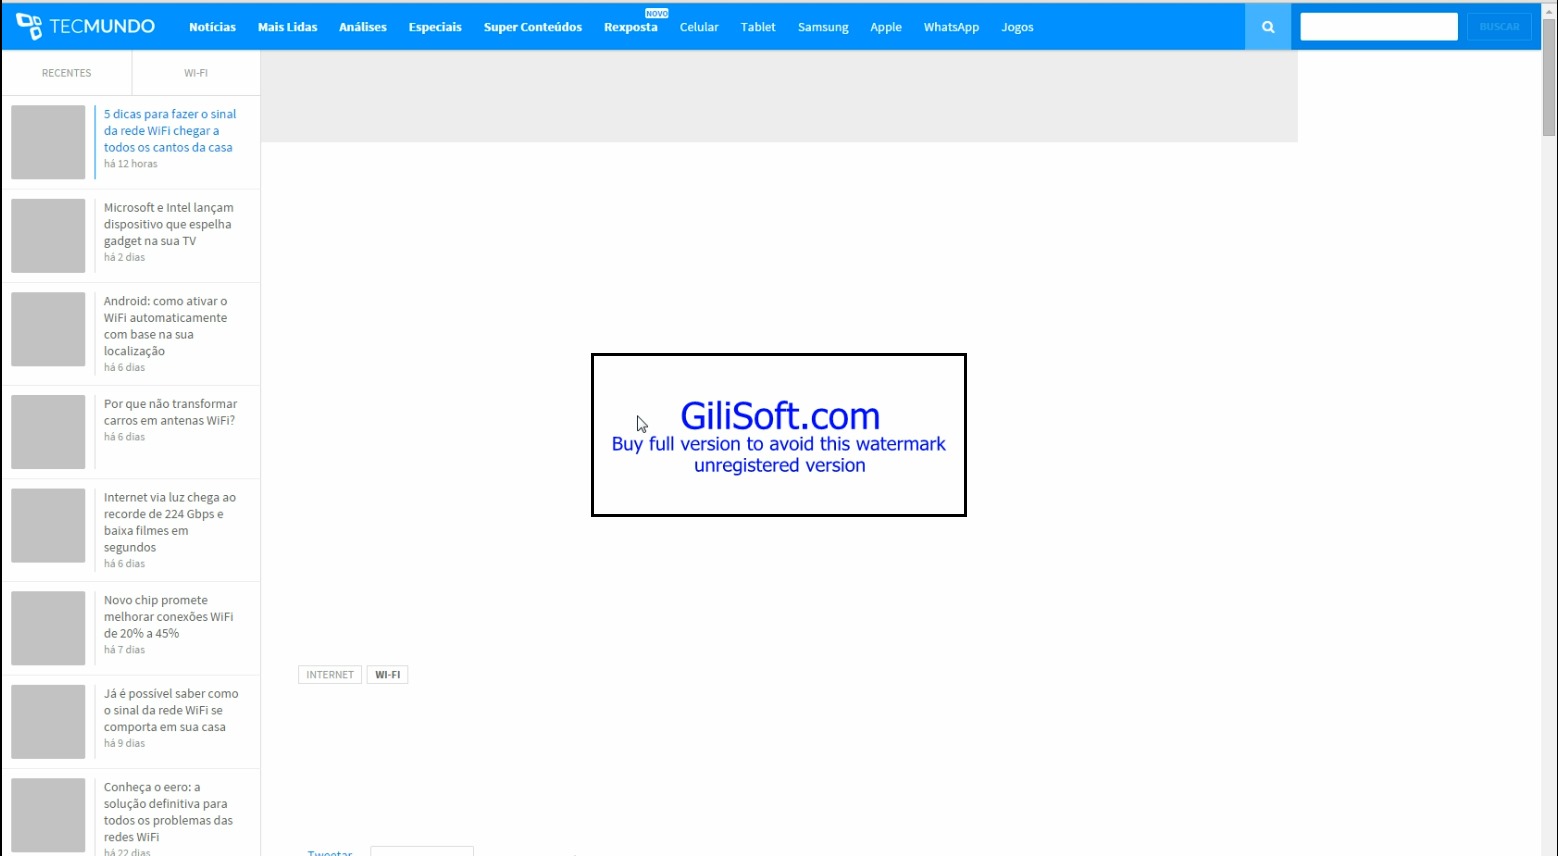 downloading GiliSoft Screen Recorder Pro 12.2